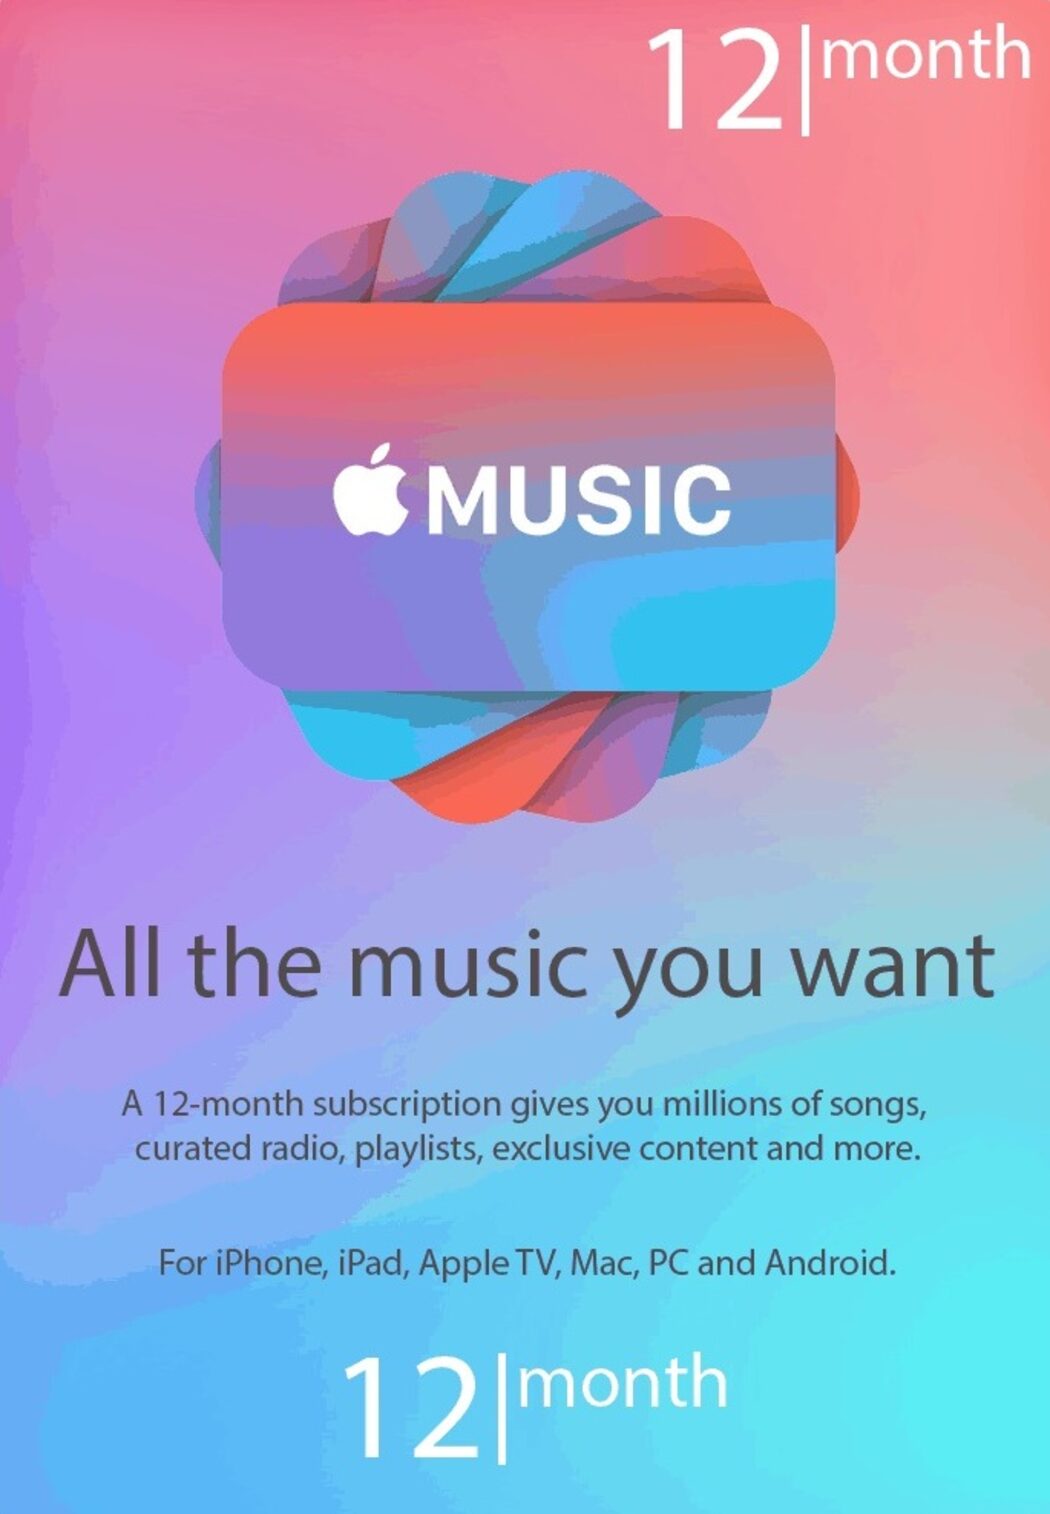 Apple Music - 12 Months Membership Gift Card